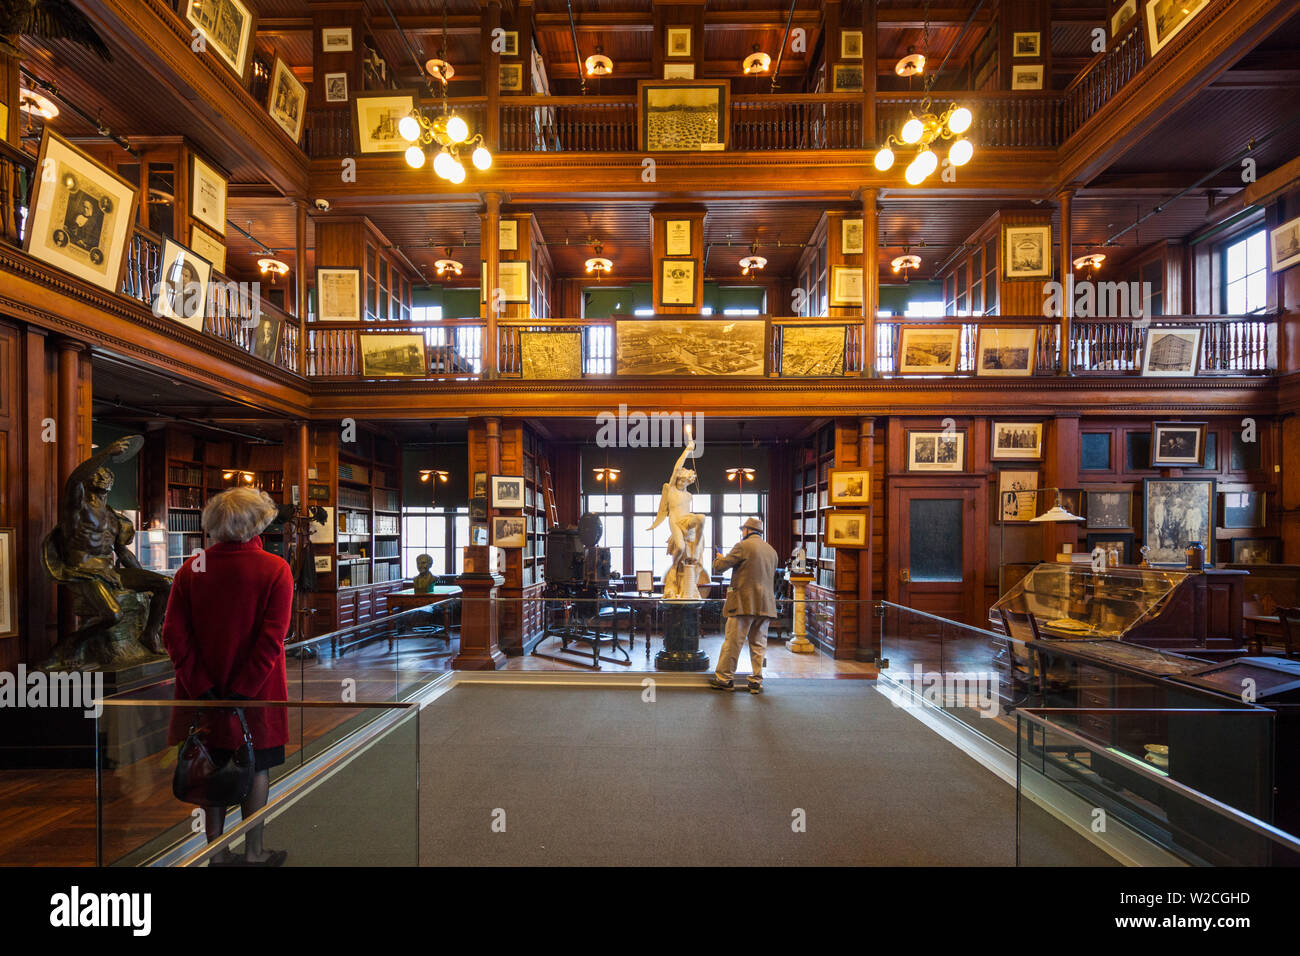 USA, New Jersey, West Orange, Thomas Edison National Historical Park, library, interior Stock Photo